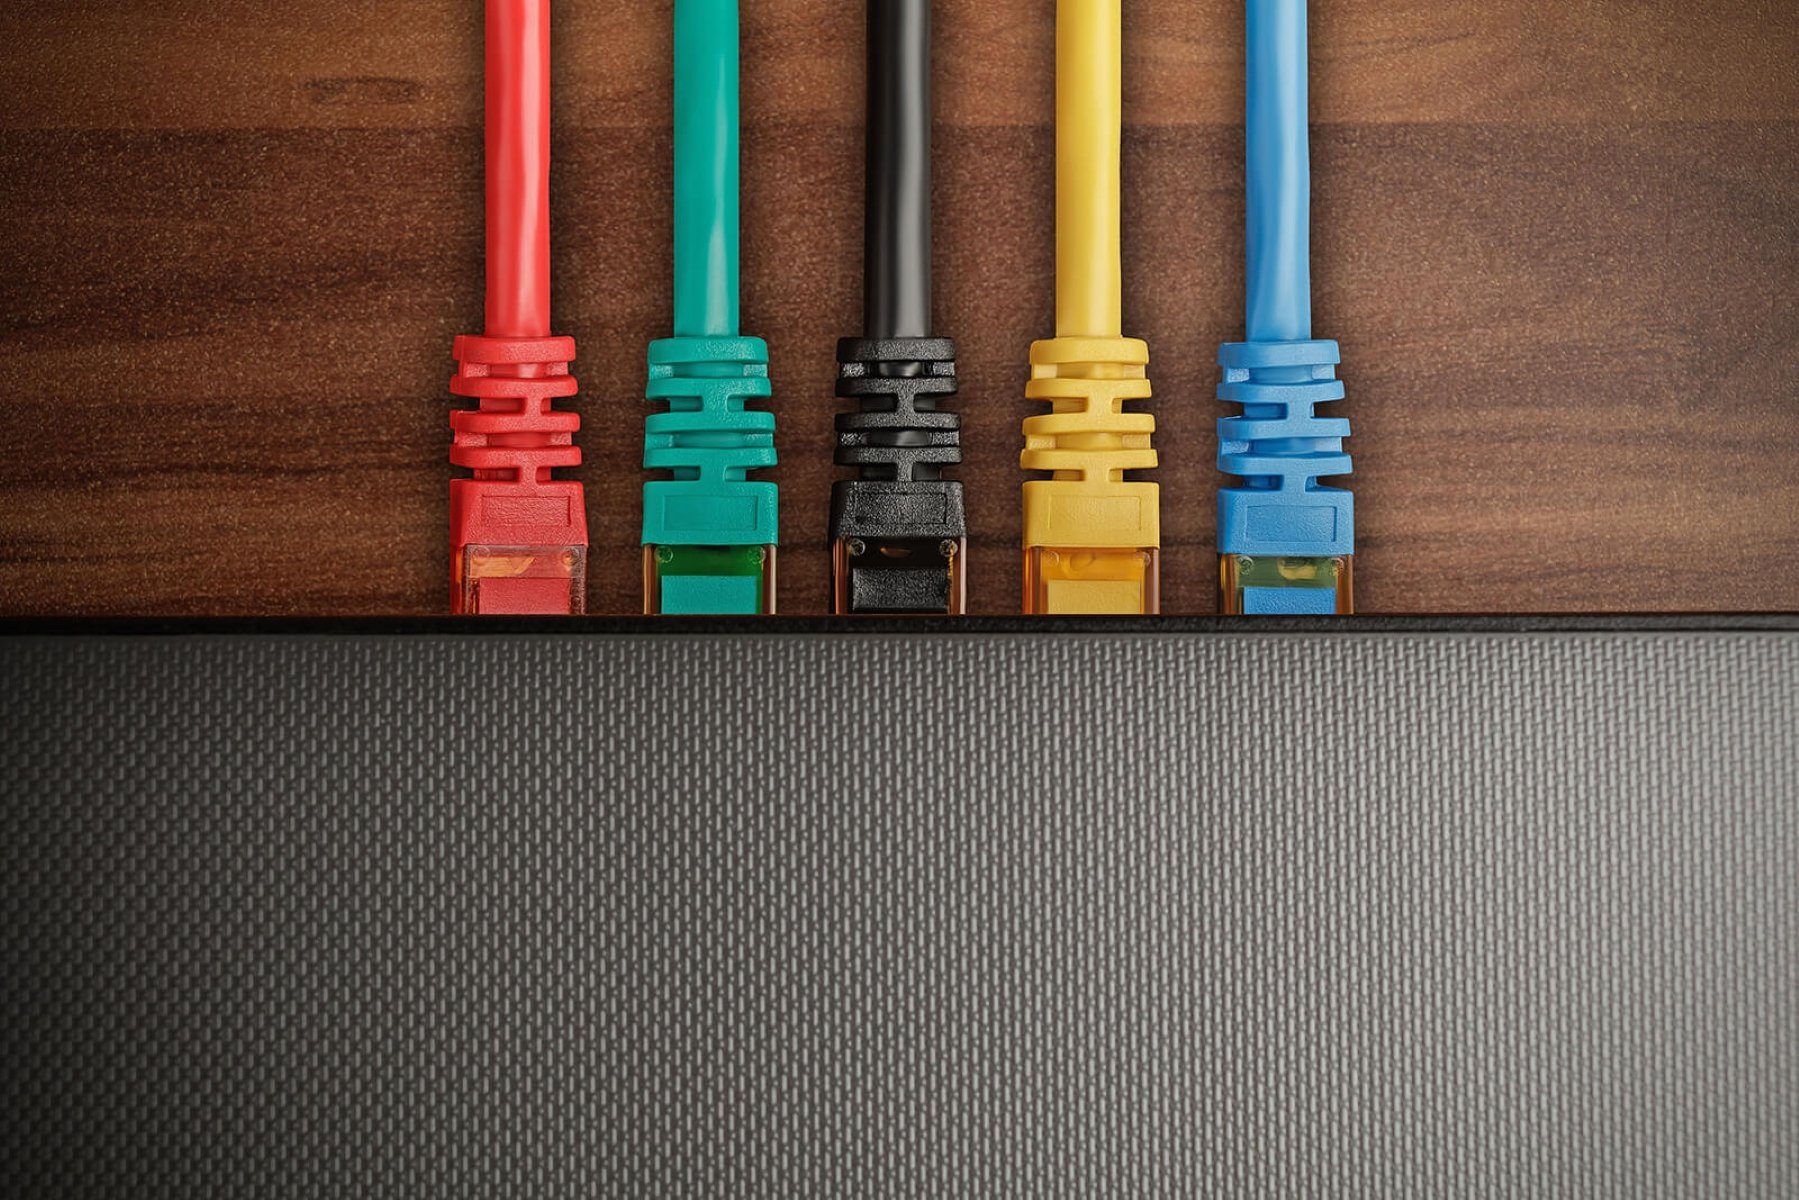 SEBSON 5x Ethernet Kabel Gigabit Netzkabel, Gelb, 1000Mbit/s cm) Grün, 6 Blau, LAN Rot (50 CAT 0,5m - Patchkabel Schwarz